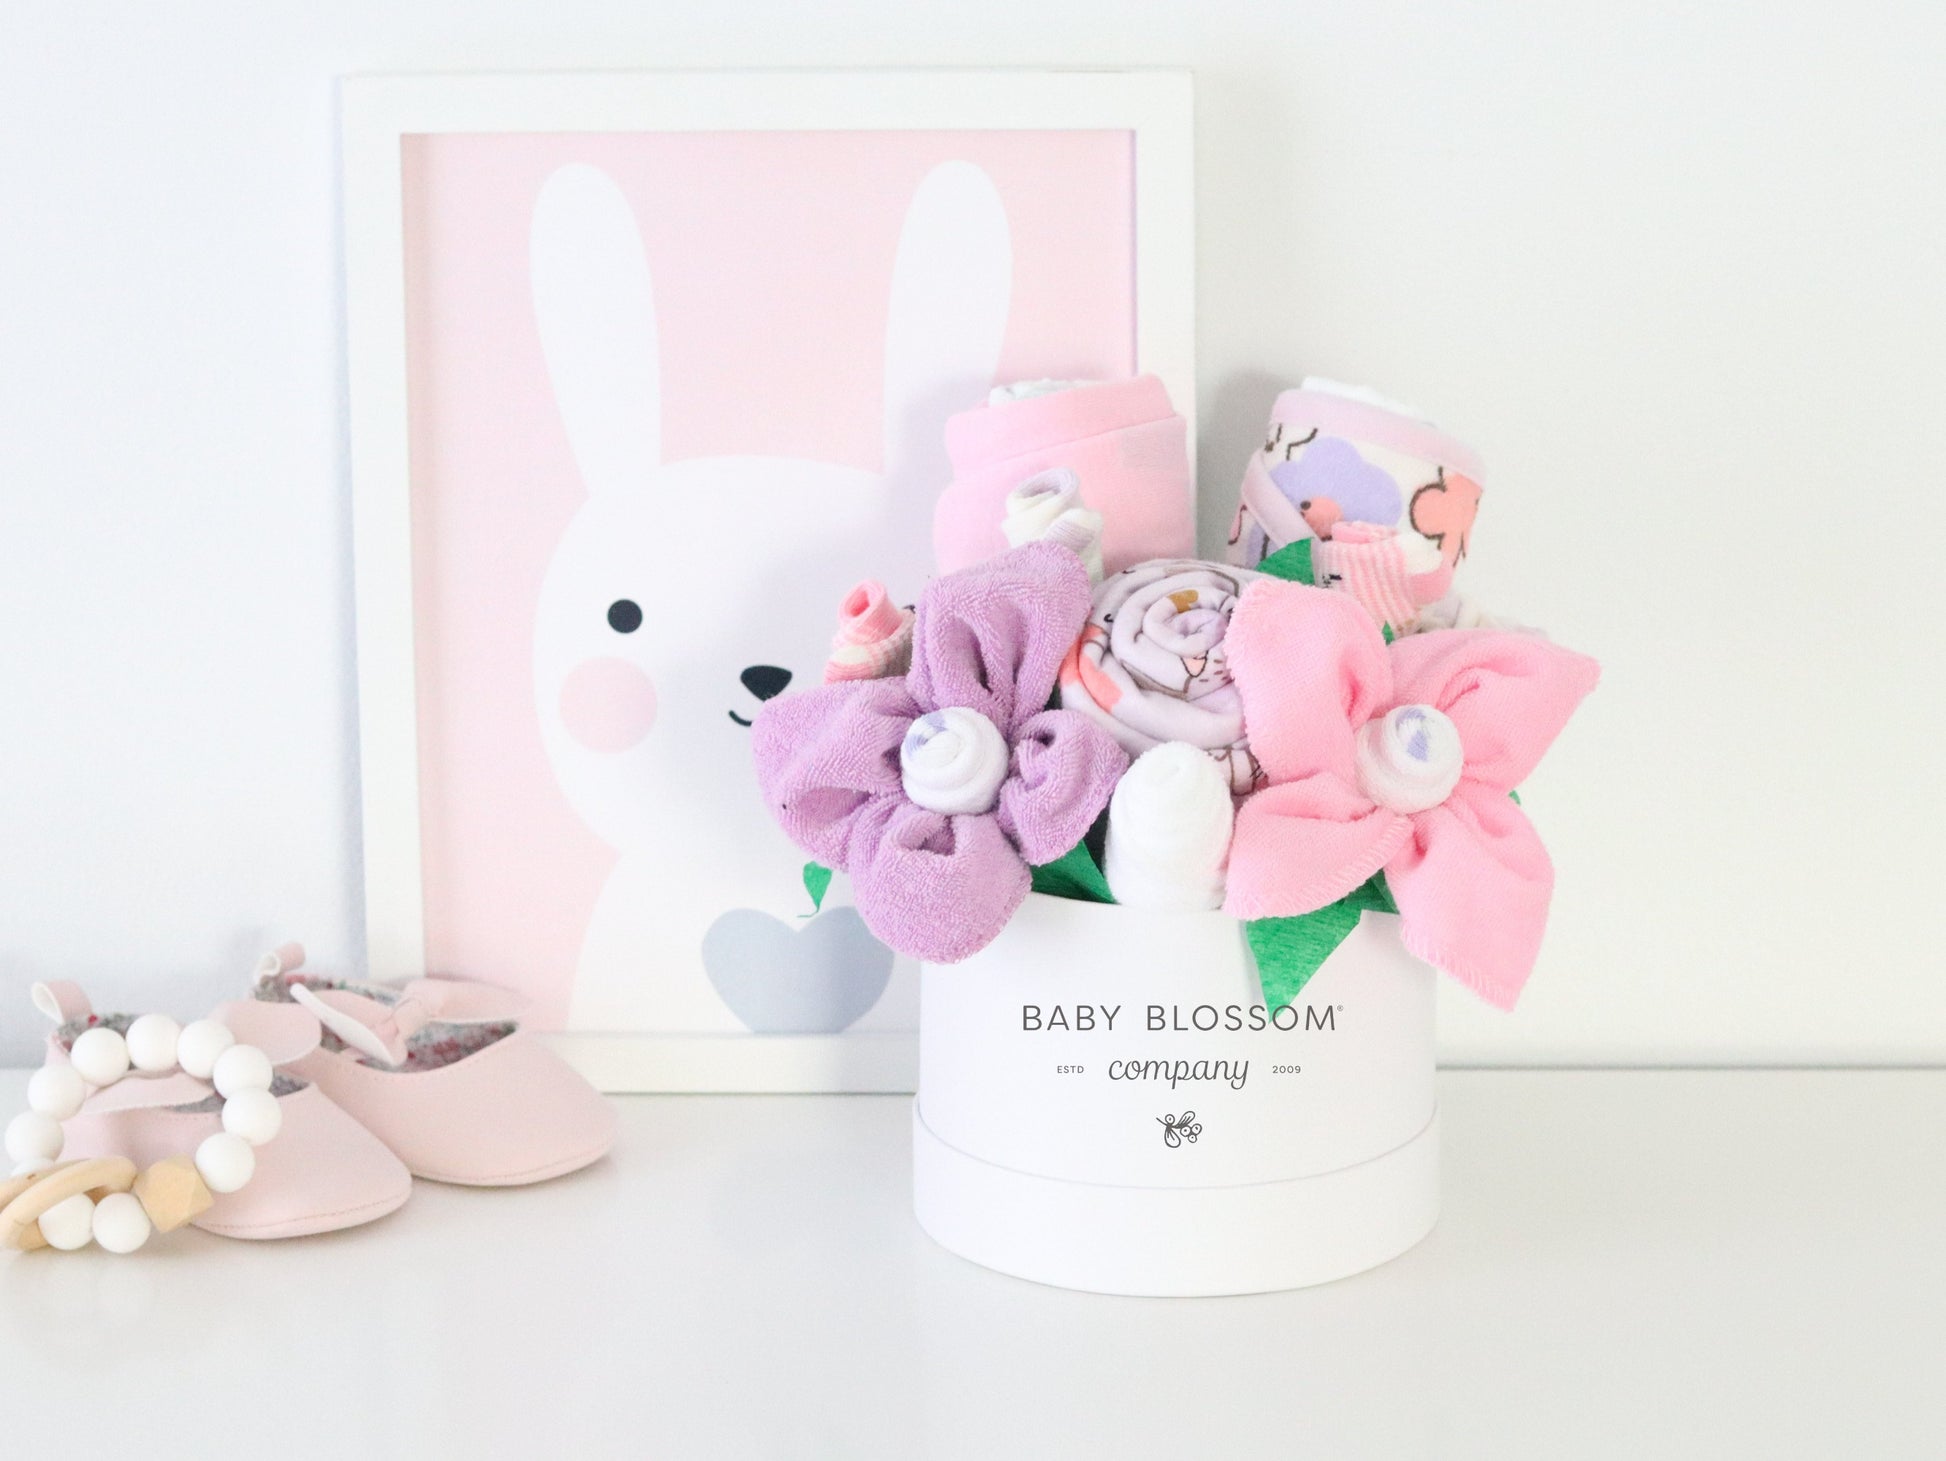 Petite bunny ballerina gift box with logo